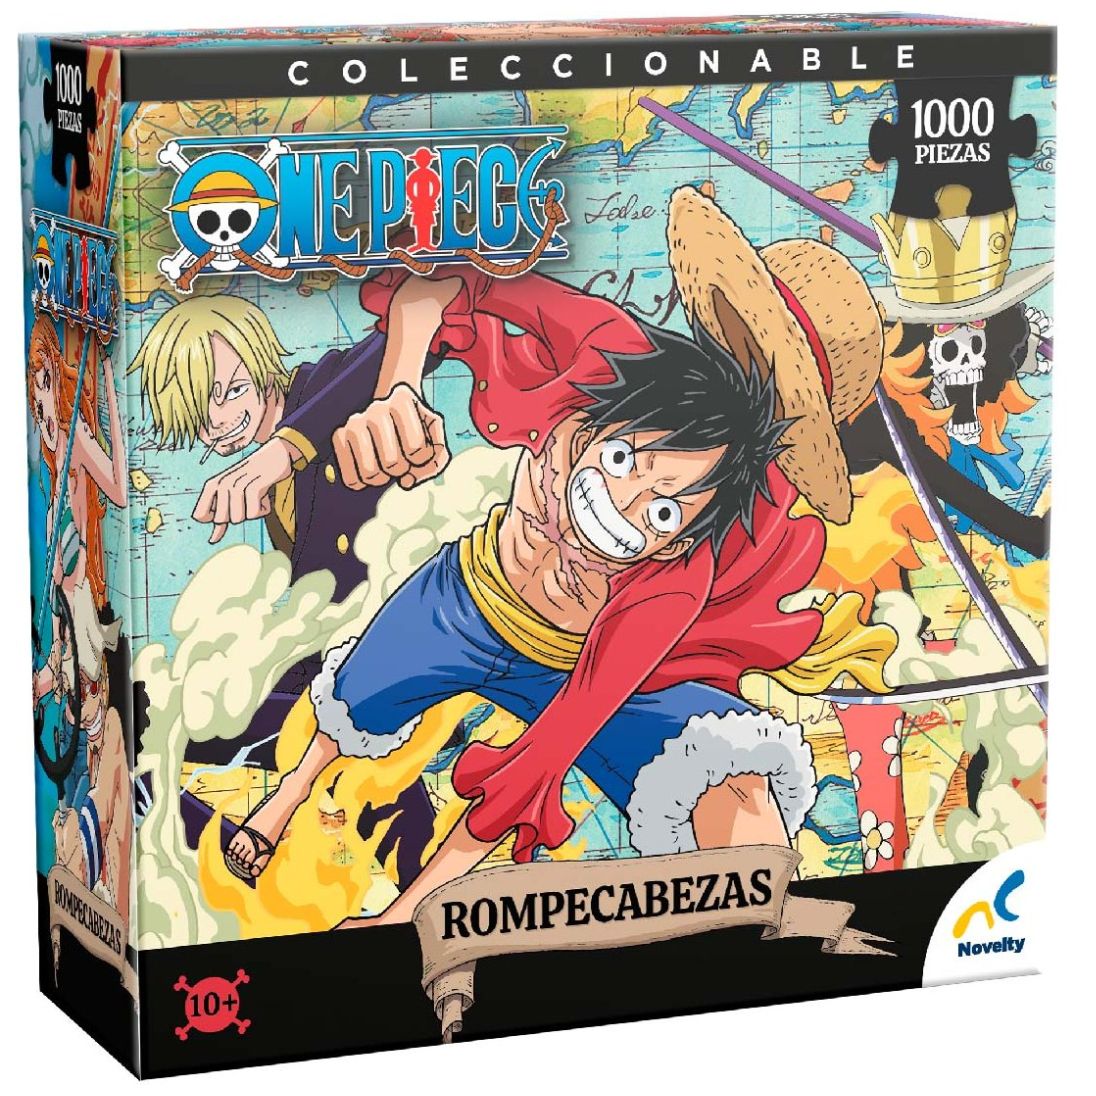 Rompecabezas Coleccionable One Piece